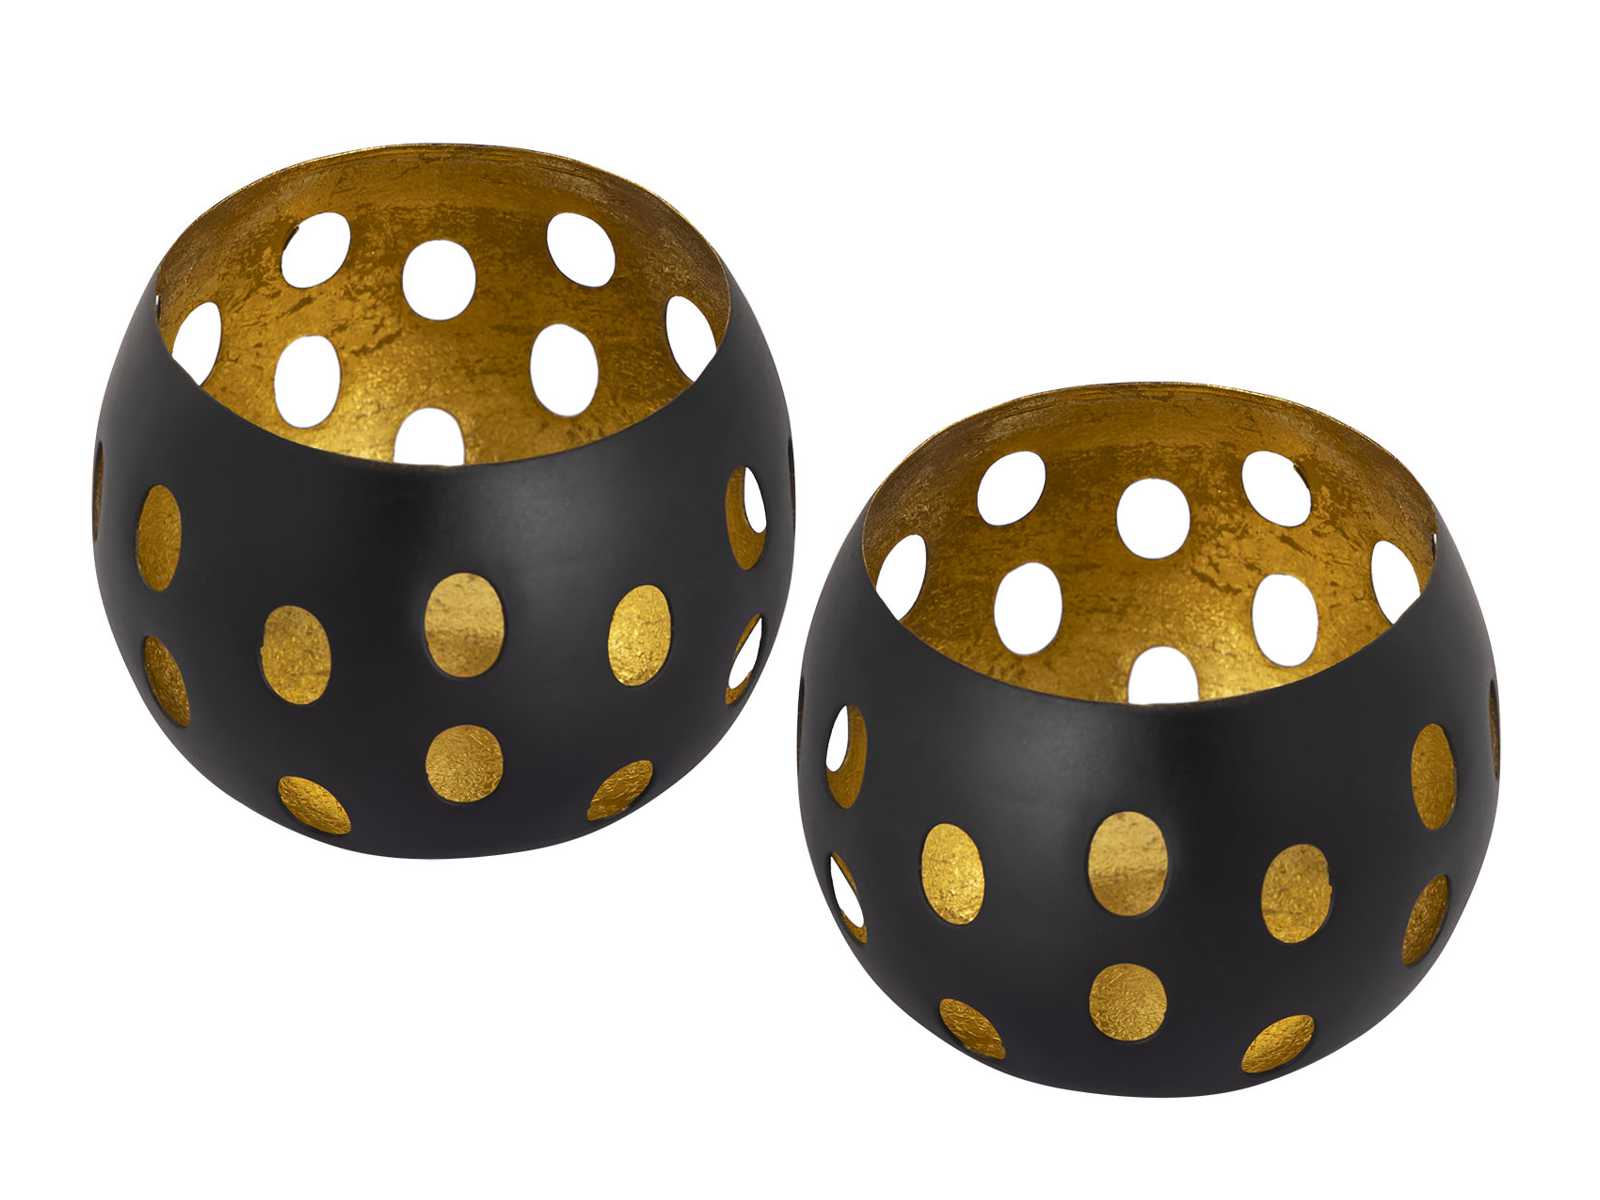 matt Set 2-teilig Casamia vergoldet schwarz Wohnen Teelichthalter | Florina Kerzenhalter Kugelform innen